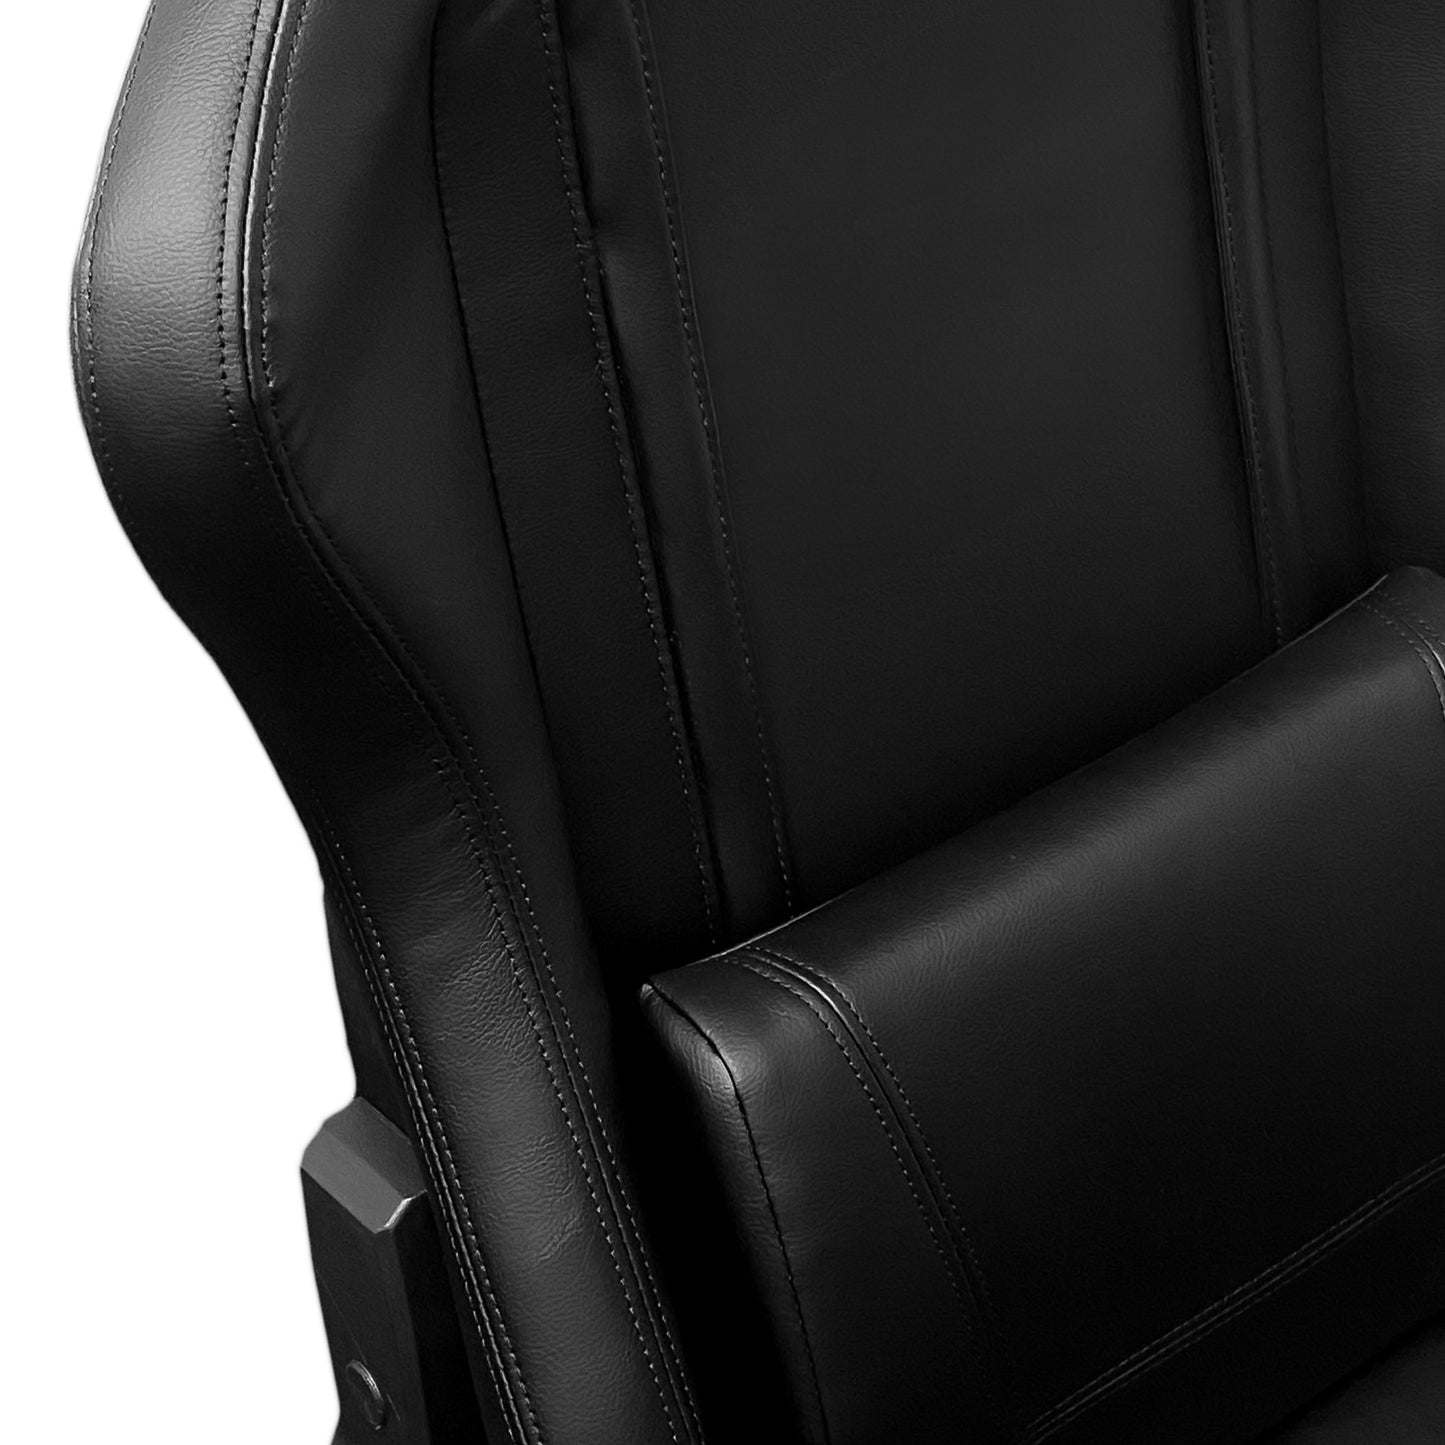 Xpression Pro Gaming Chair with Dallas Mavericks Logo